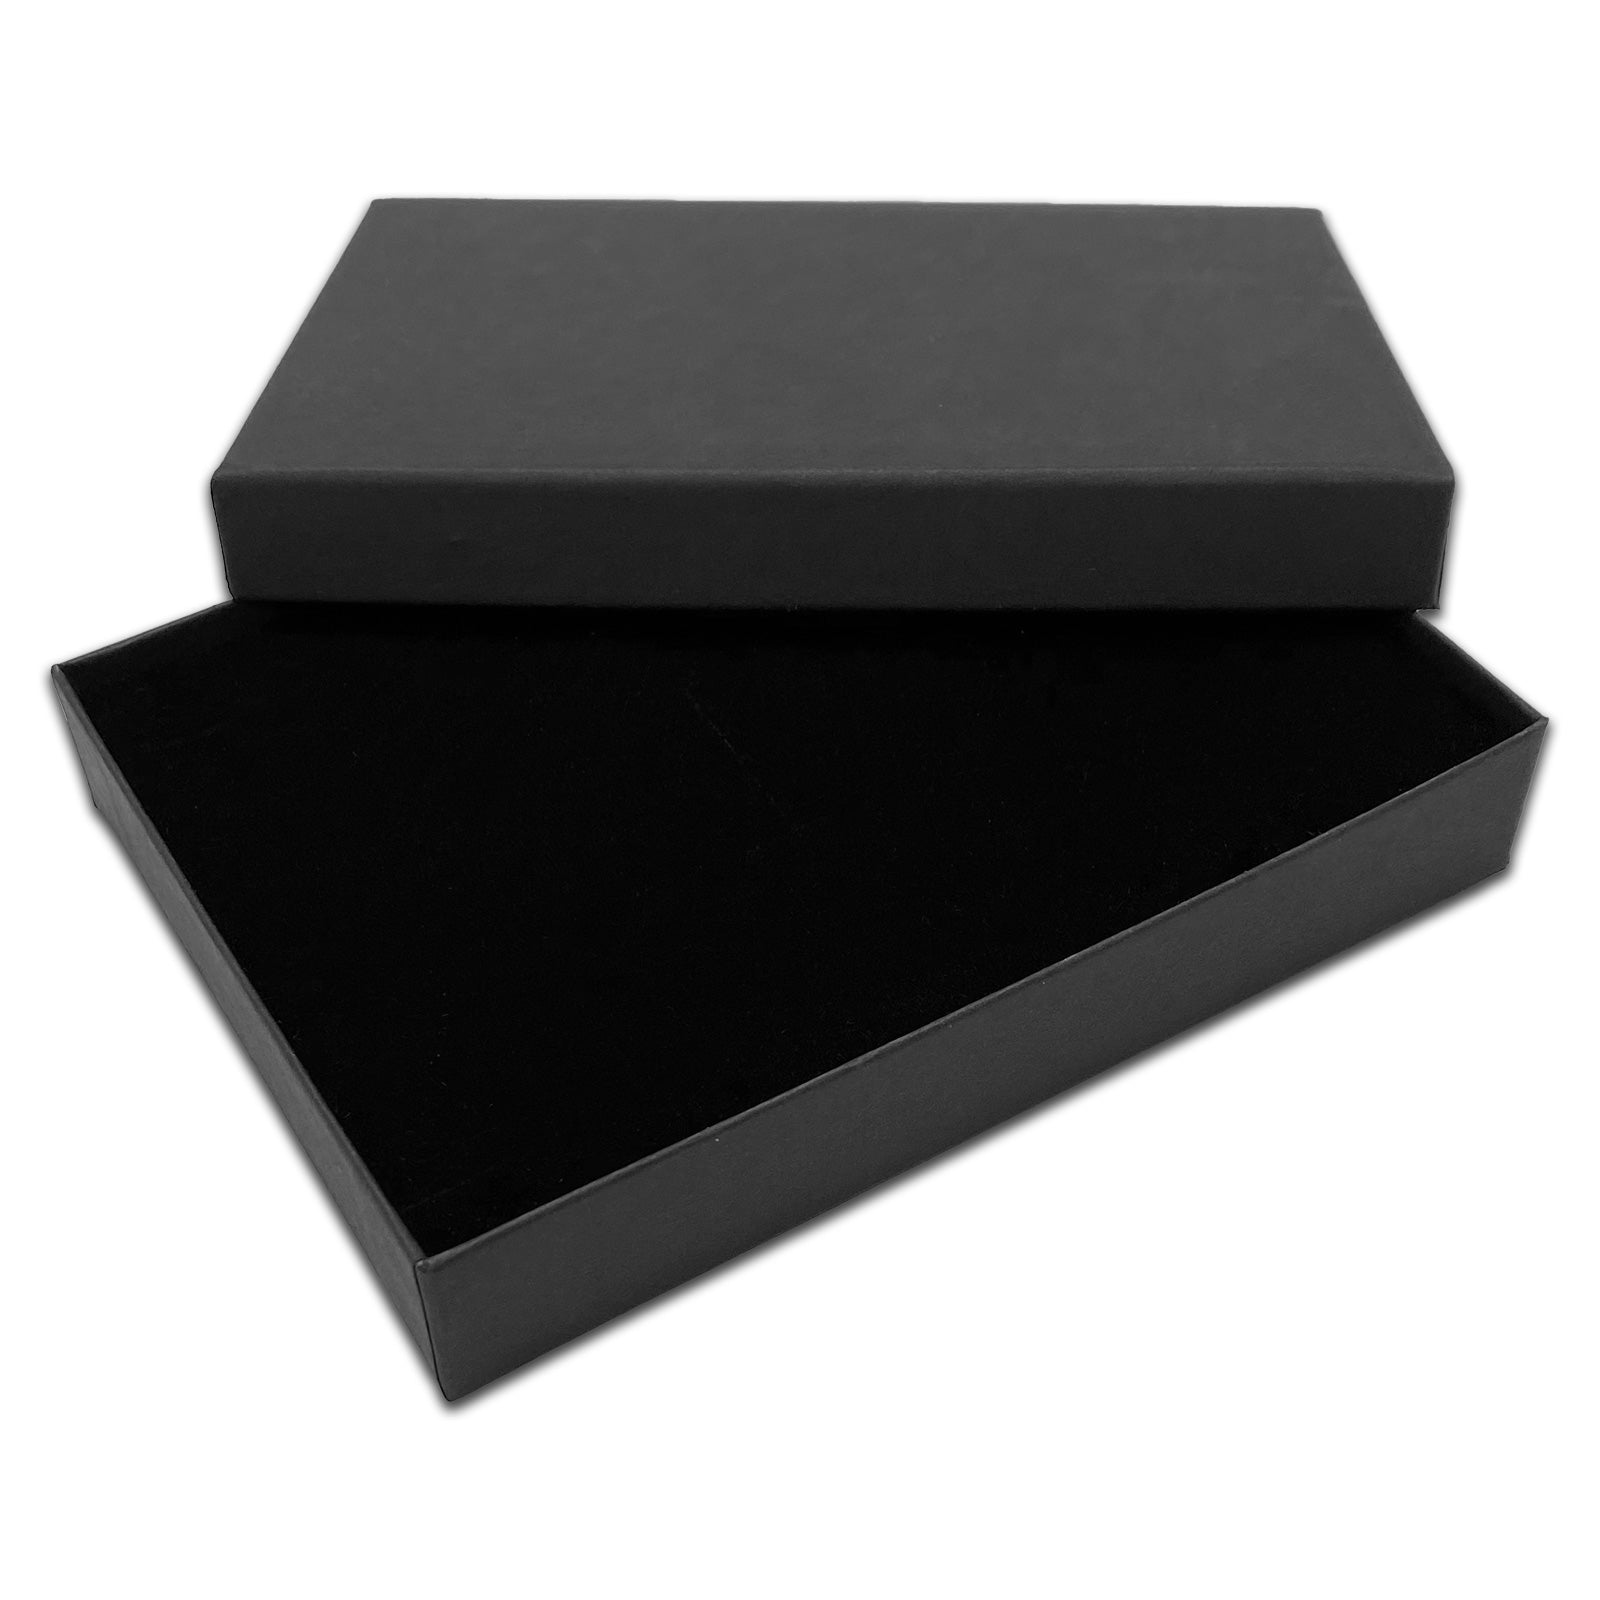 3 x 3 x 3 Black Cardboard Boxes